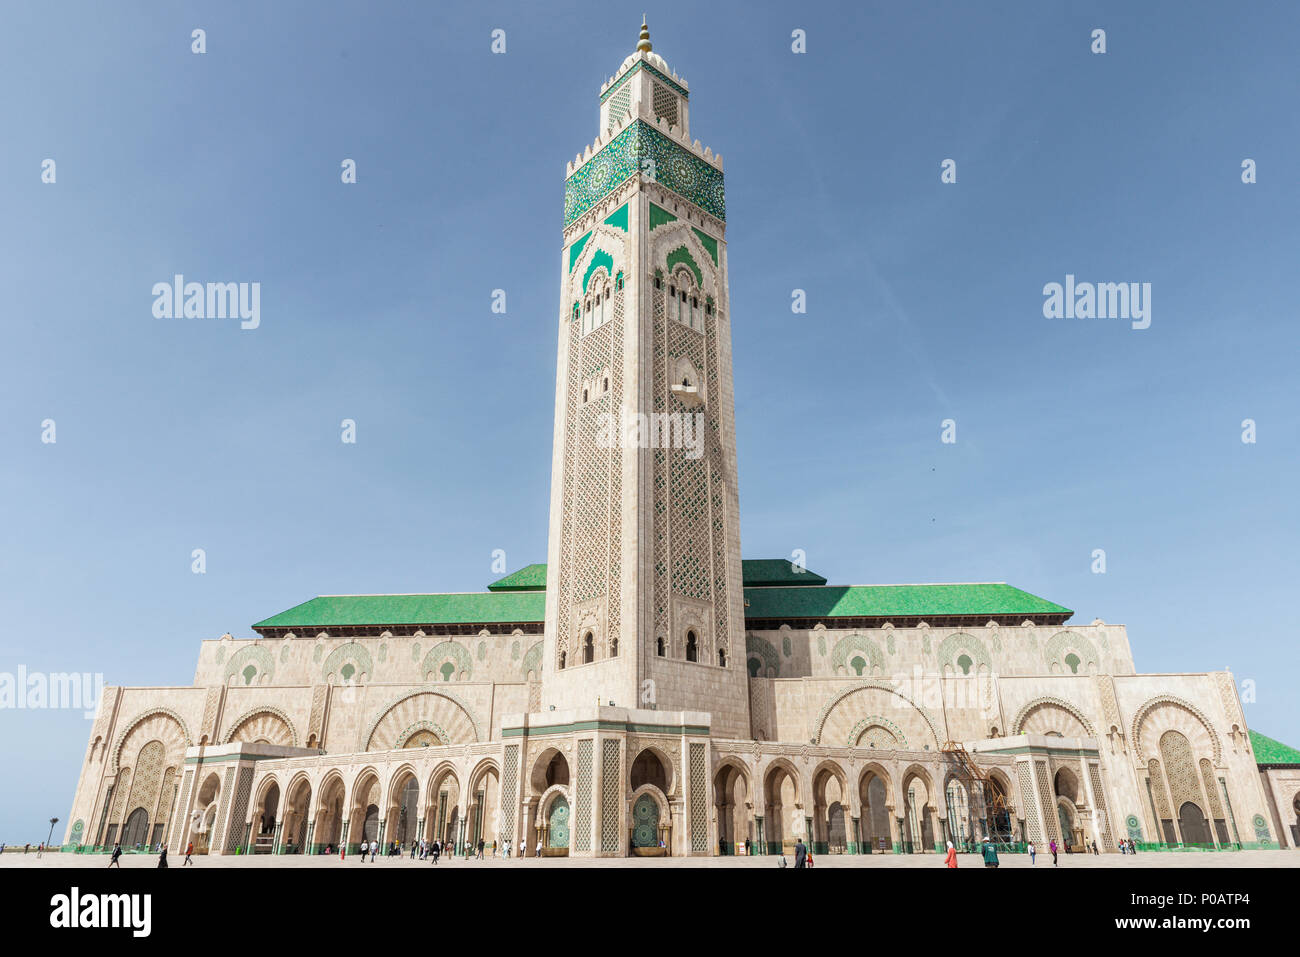 Hassan II Mosque, Grande Mosquée Hassan II, Moorish architecture, with 210m highest minaret in the world, Casablanca, Morocco Stock Photo